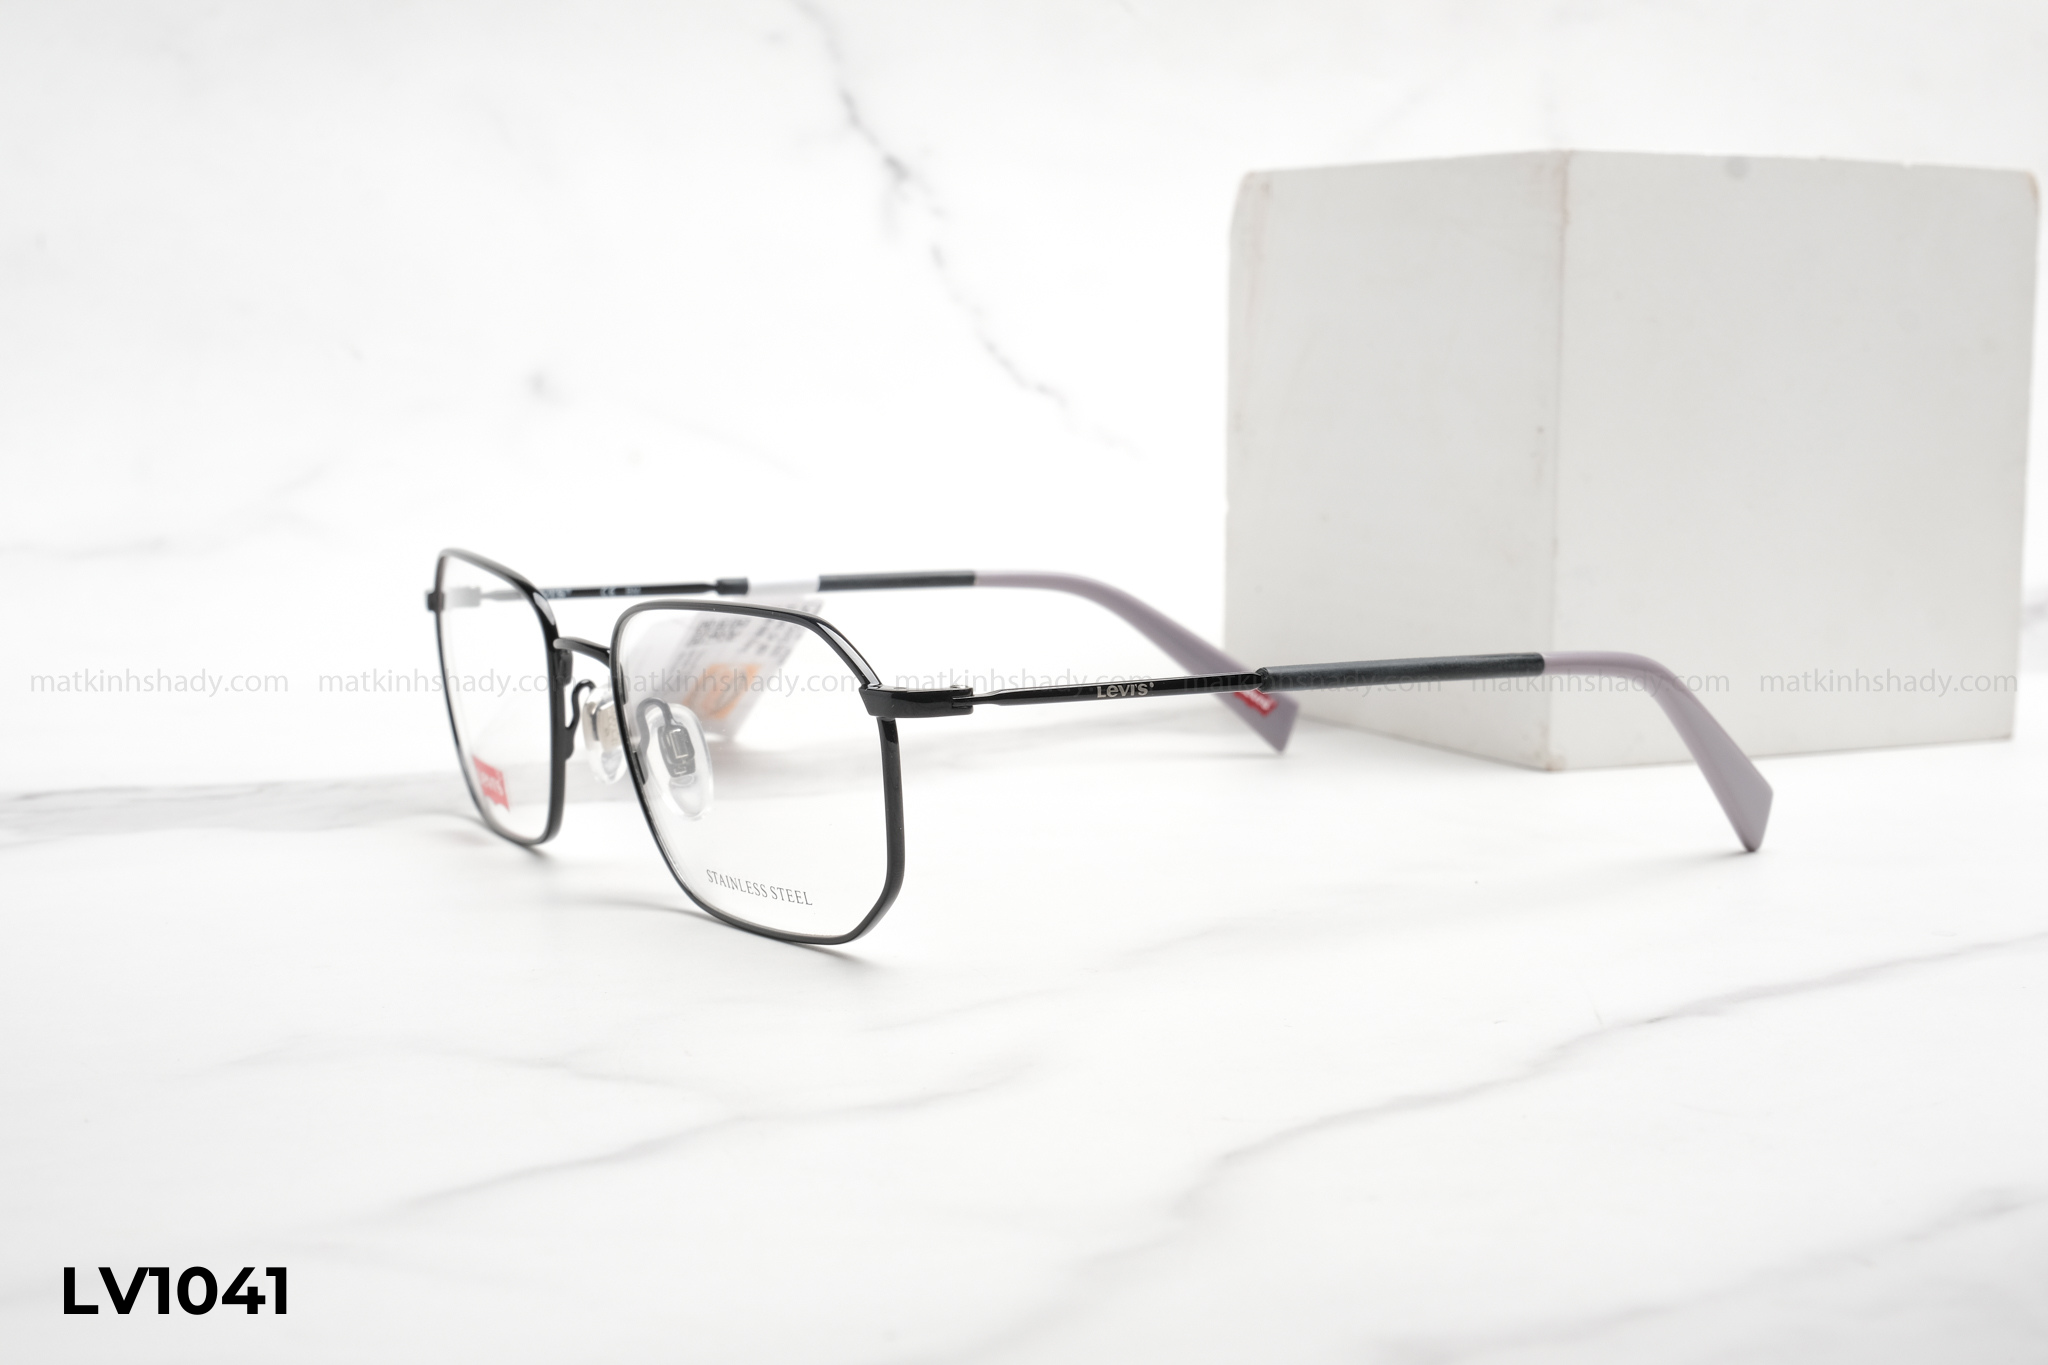  Levi's Eyewear - Glasses - LV1041 